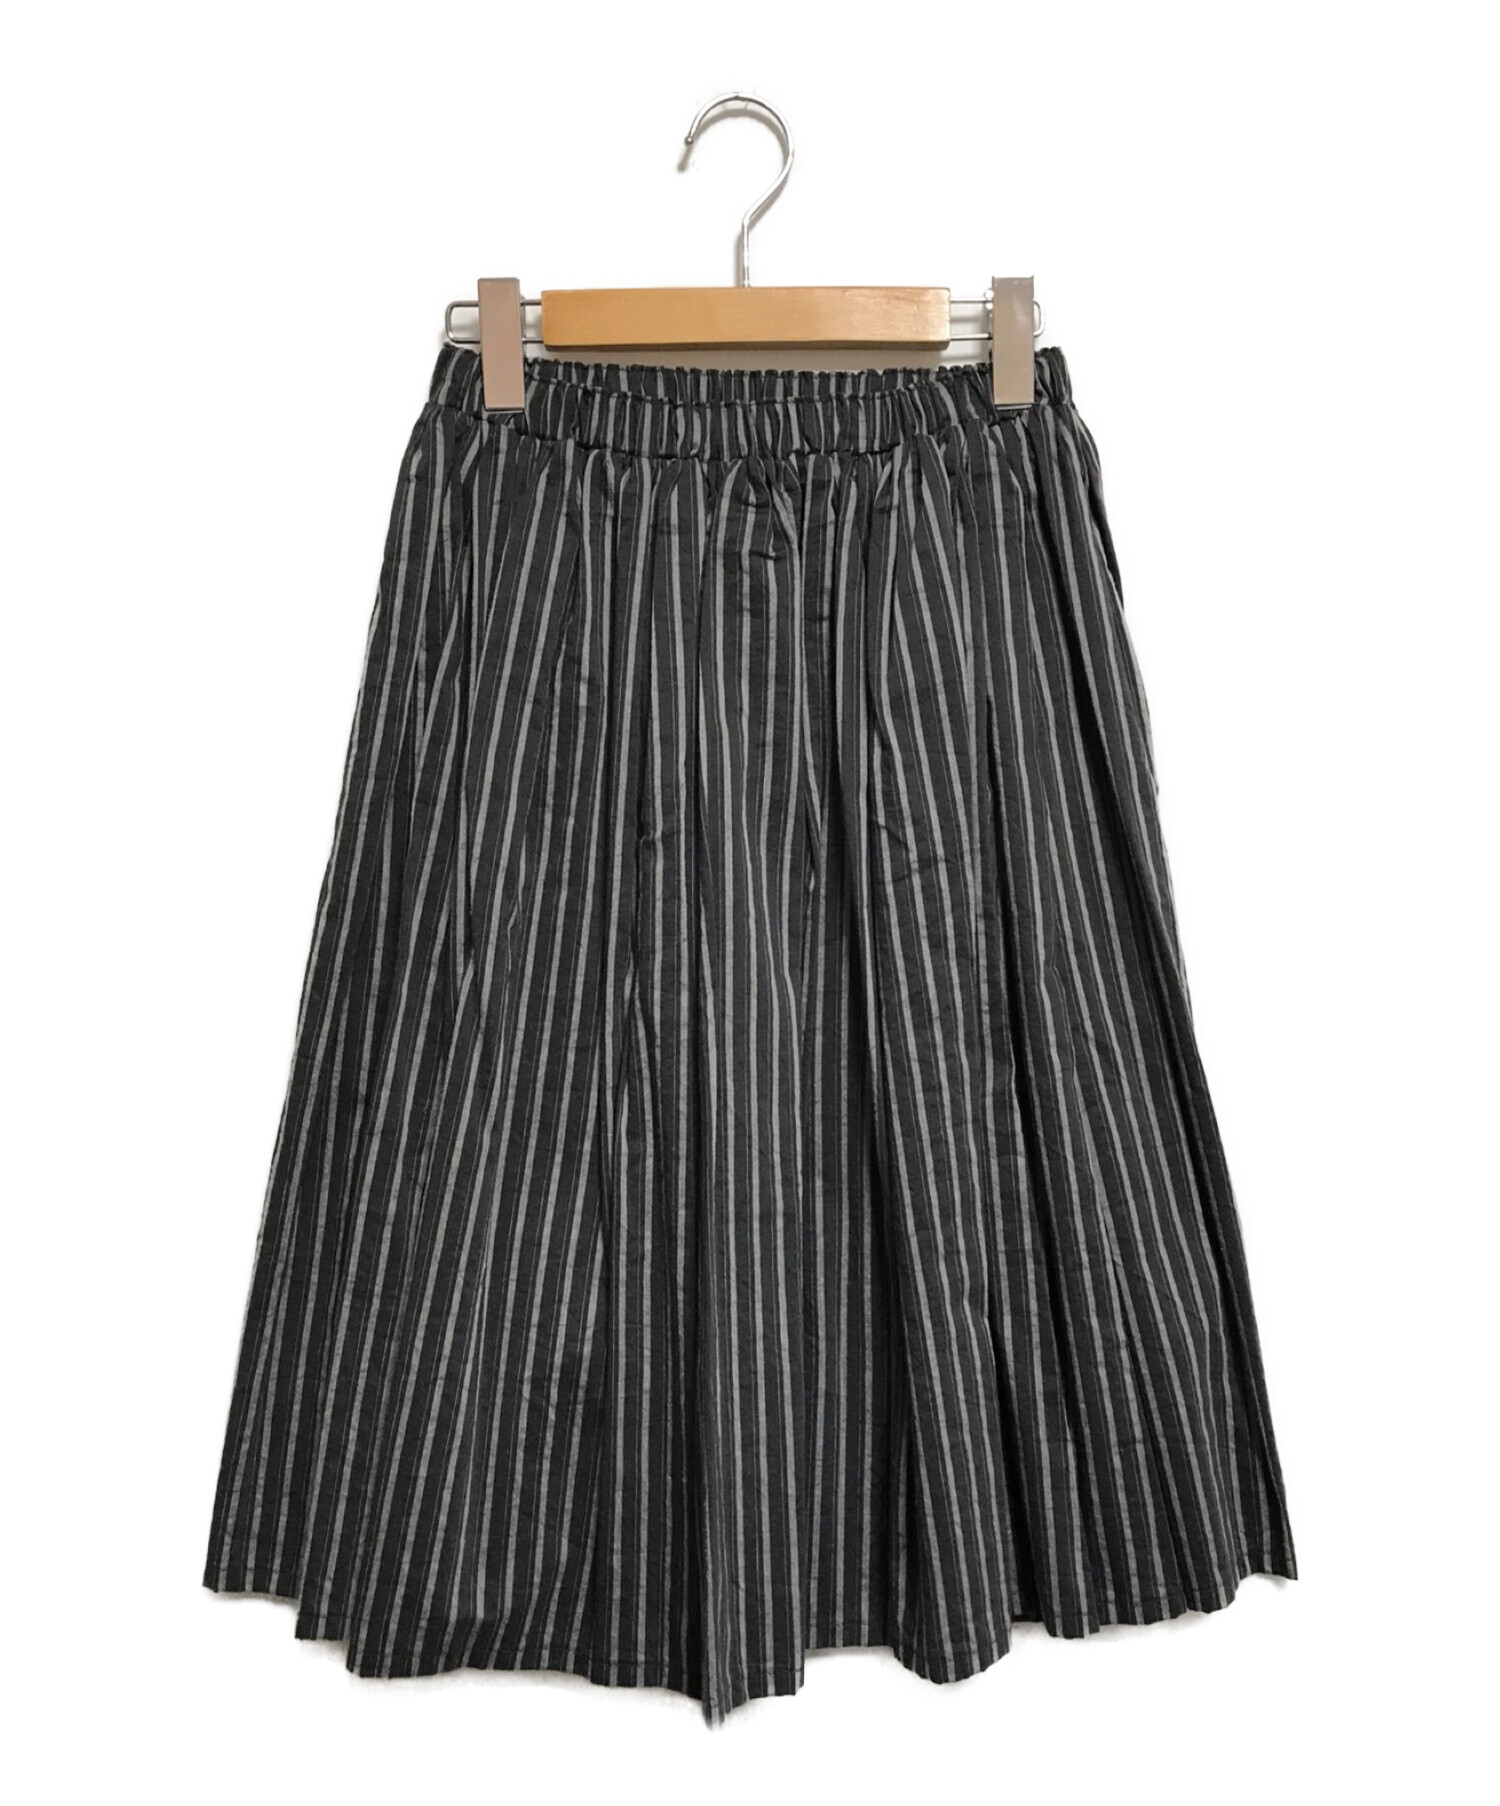 Watanabe Textile (ワタナベテキスタイル) ストライプスカート ネイビー サイズ:なし(下記参照)